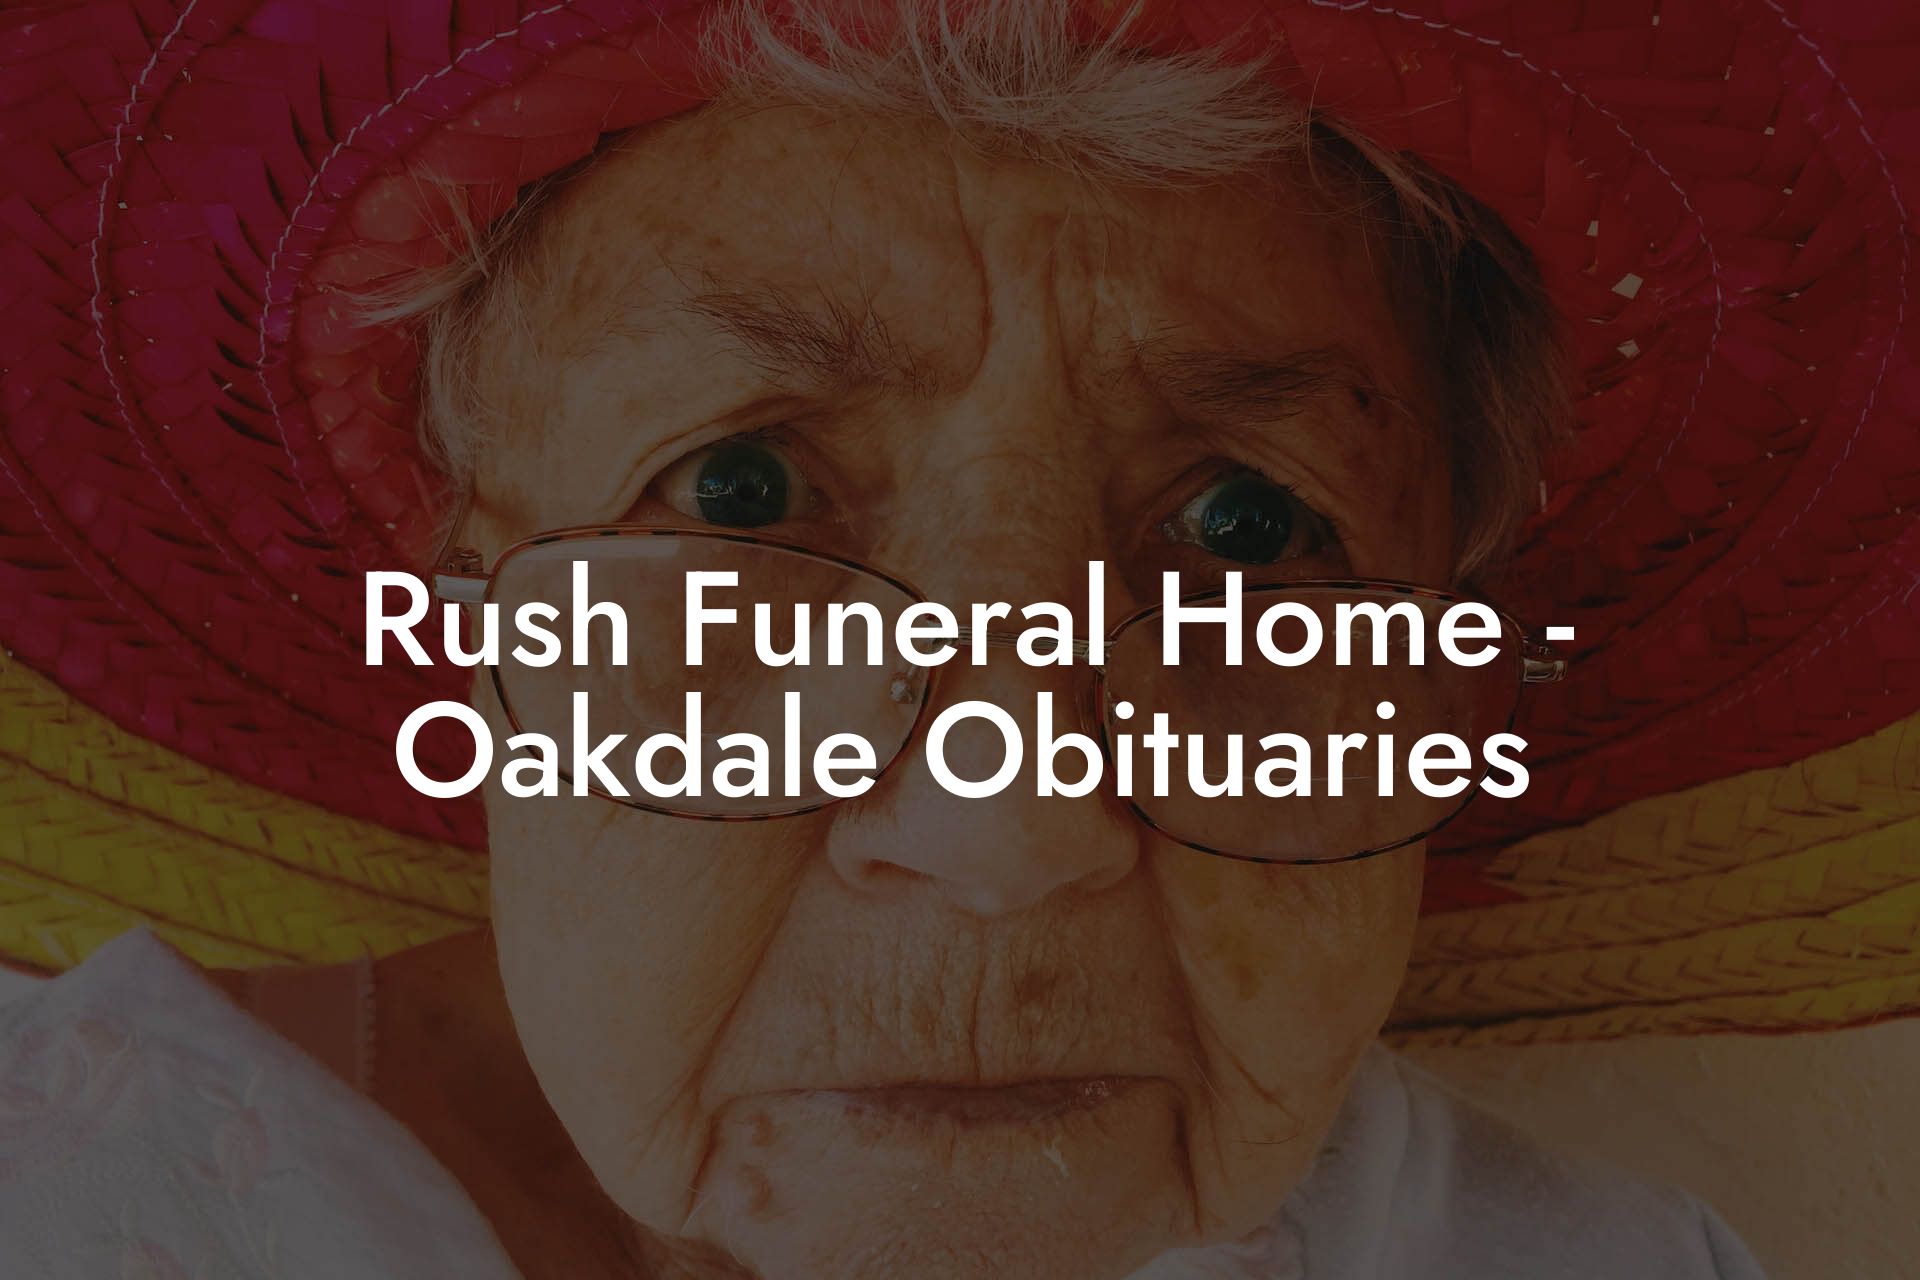 Rush Funeral Home - Oakdale Obituaries